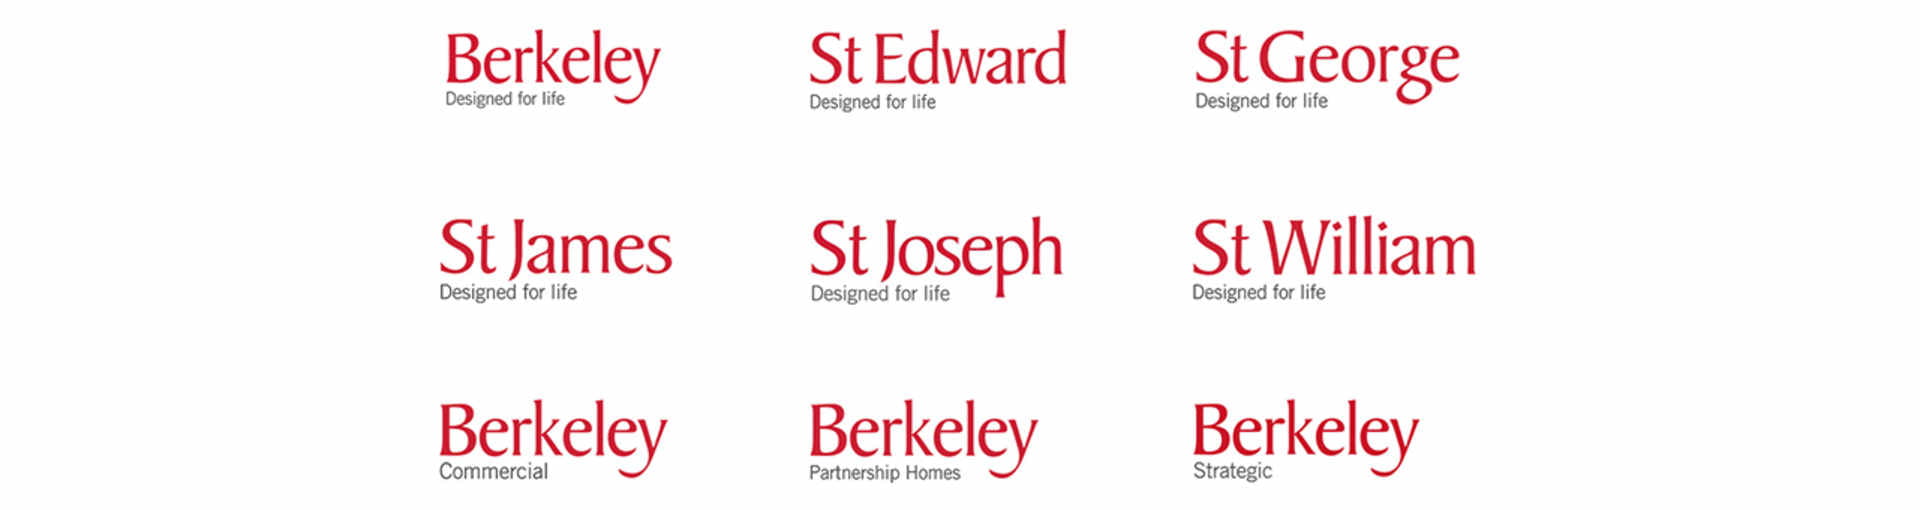 Berkeley Group, Brands and Companies, Company Logos